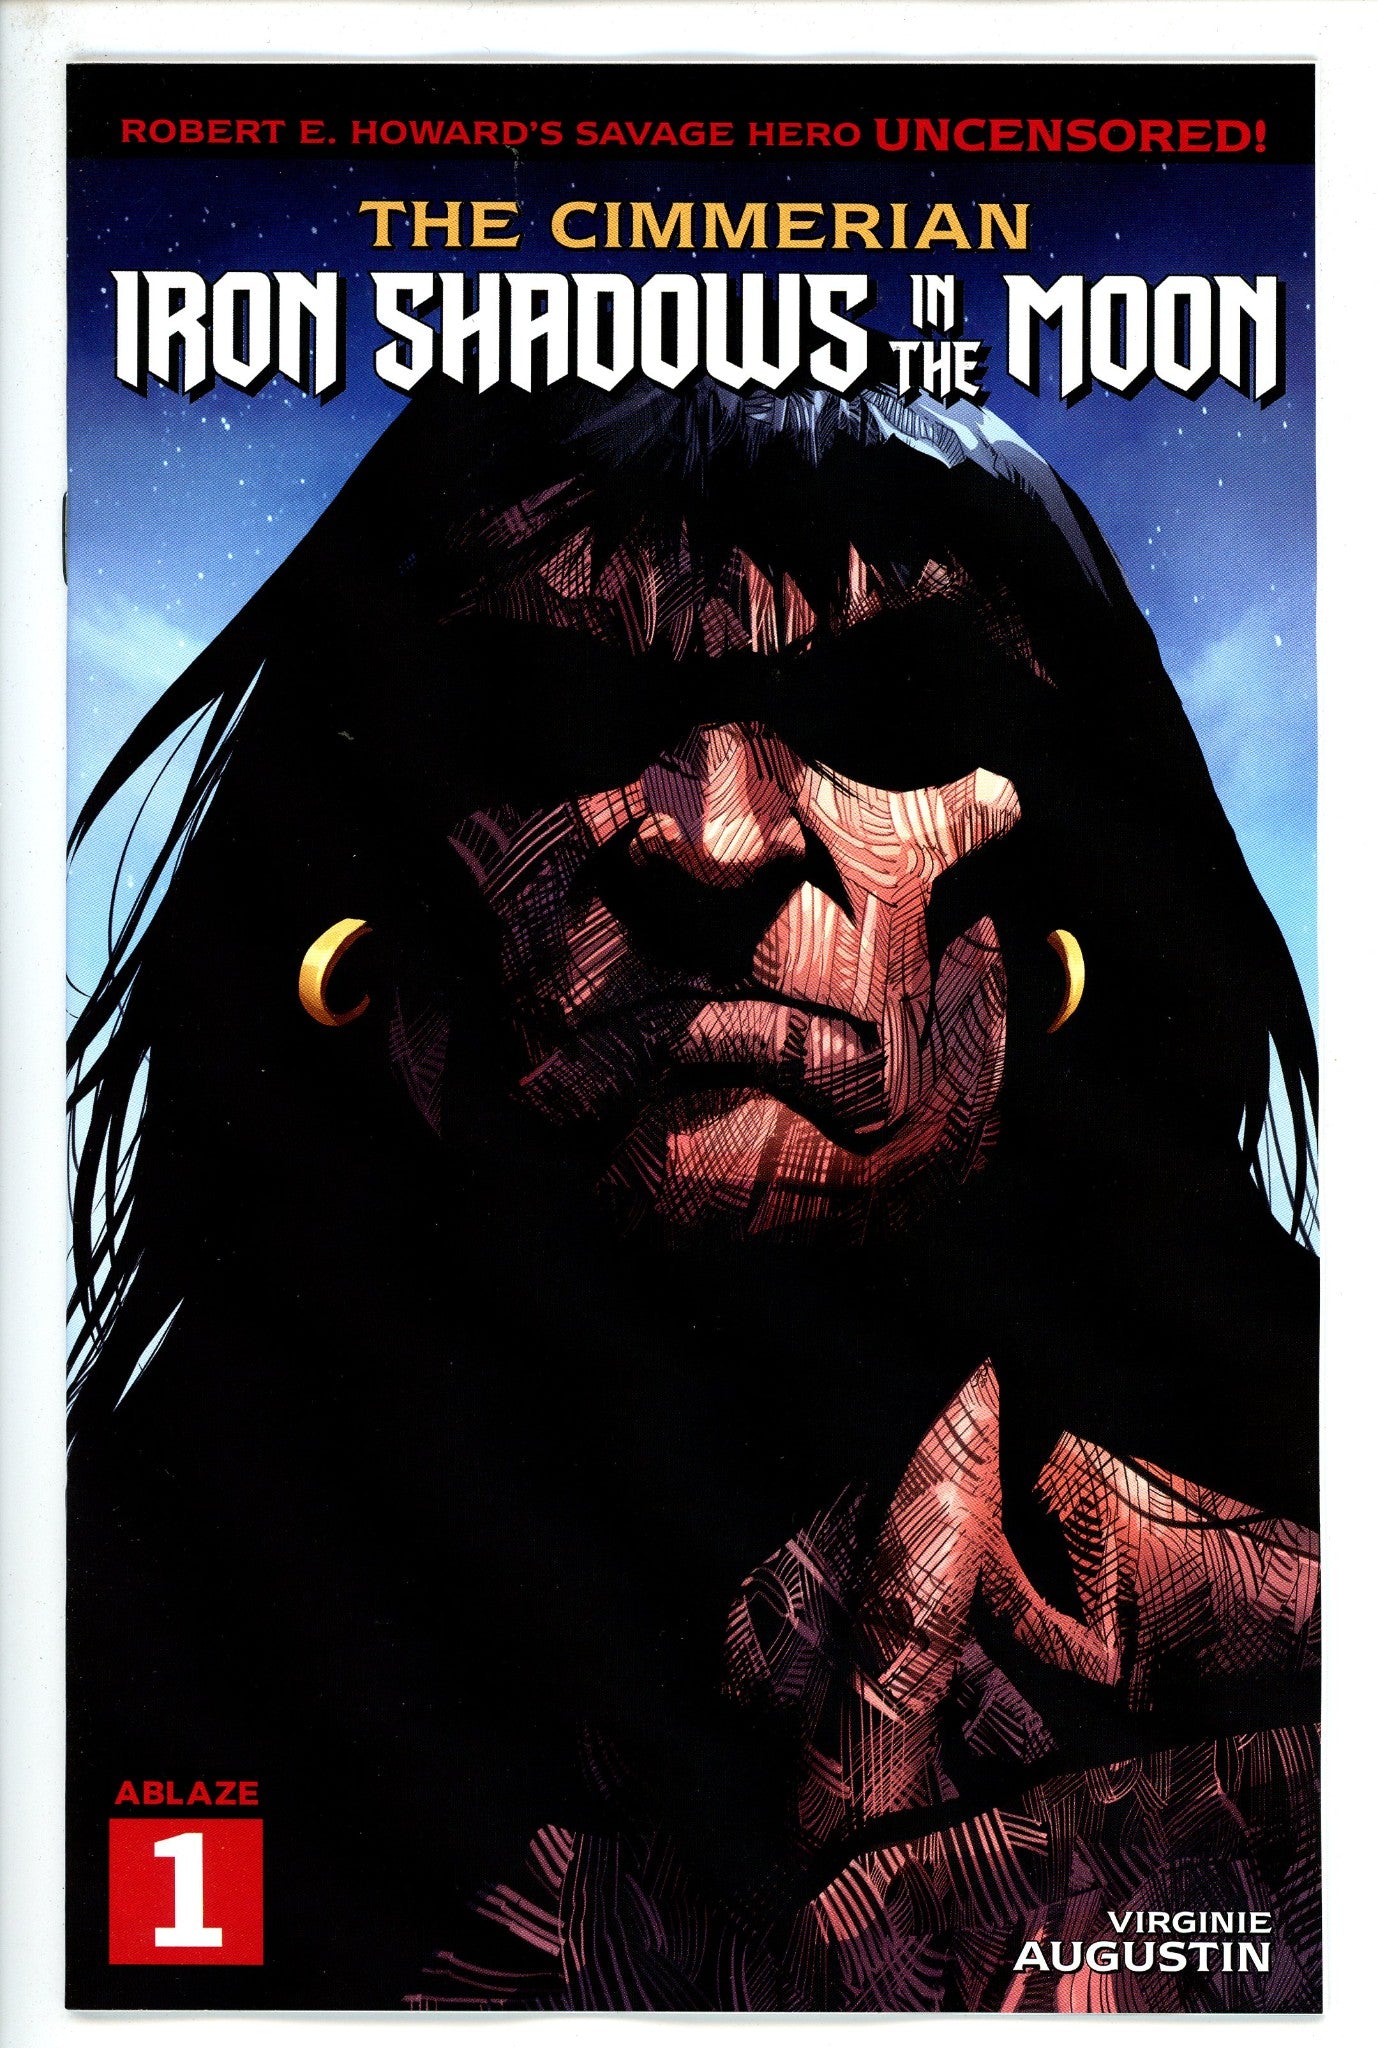 Cimmerian Iron Shadows in Moon 1 Baldisimo Variant-Ablaze-CaptCan Comics Inc